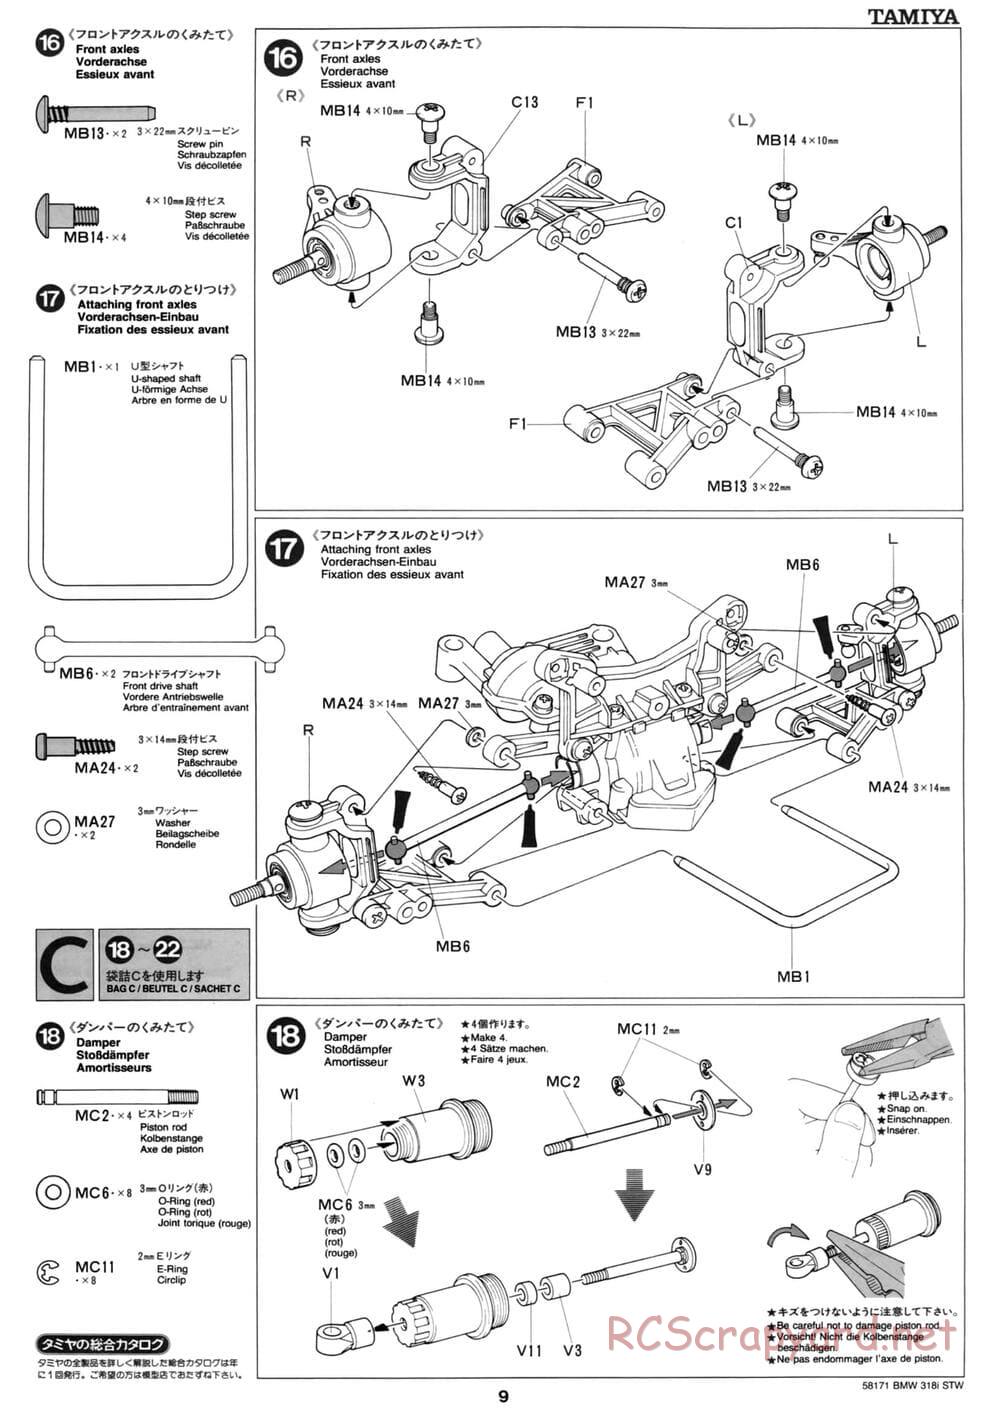 Tamiya - BMW 318i STW - TA-02 Chassis - Manual - Page 9